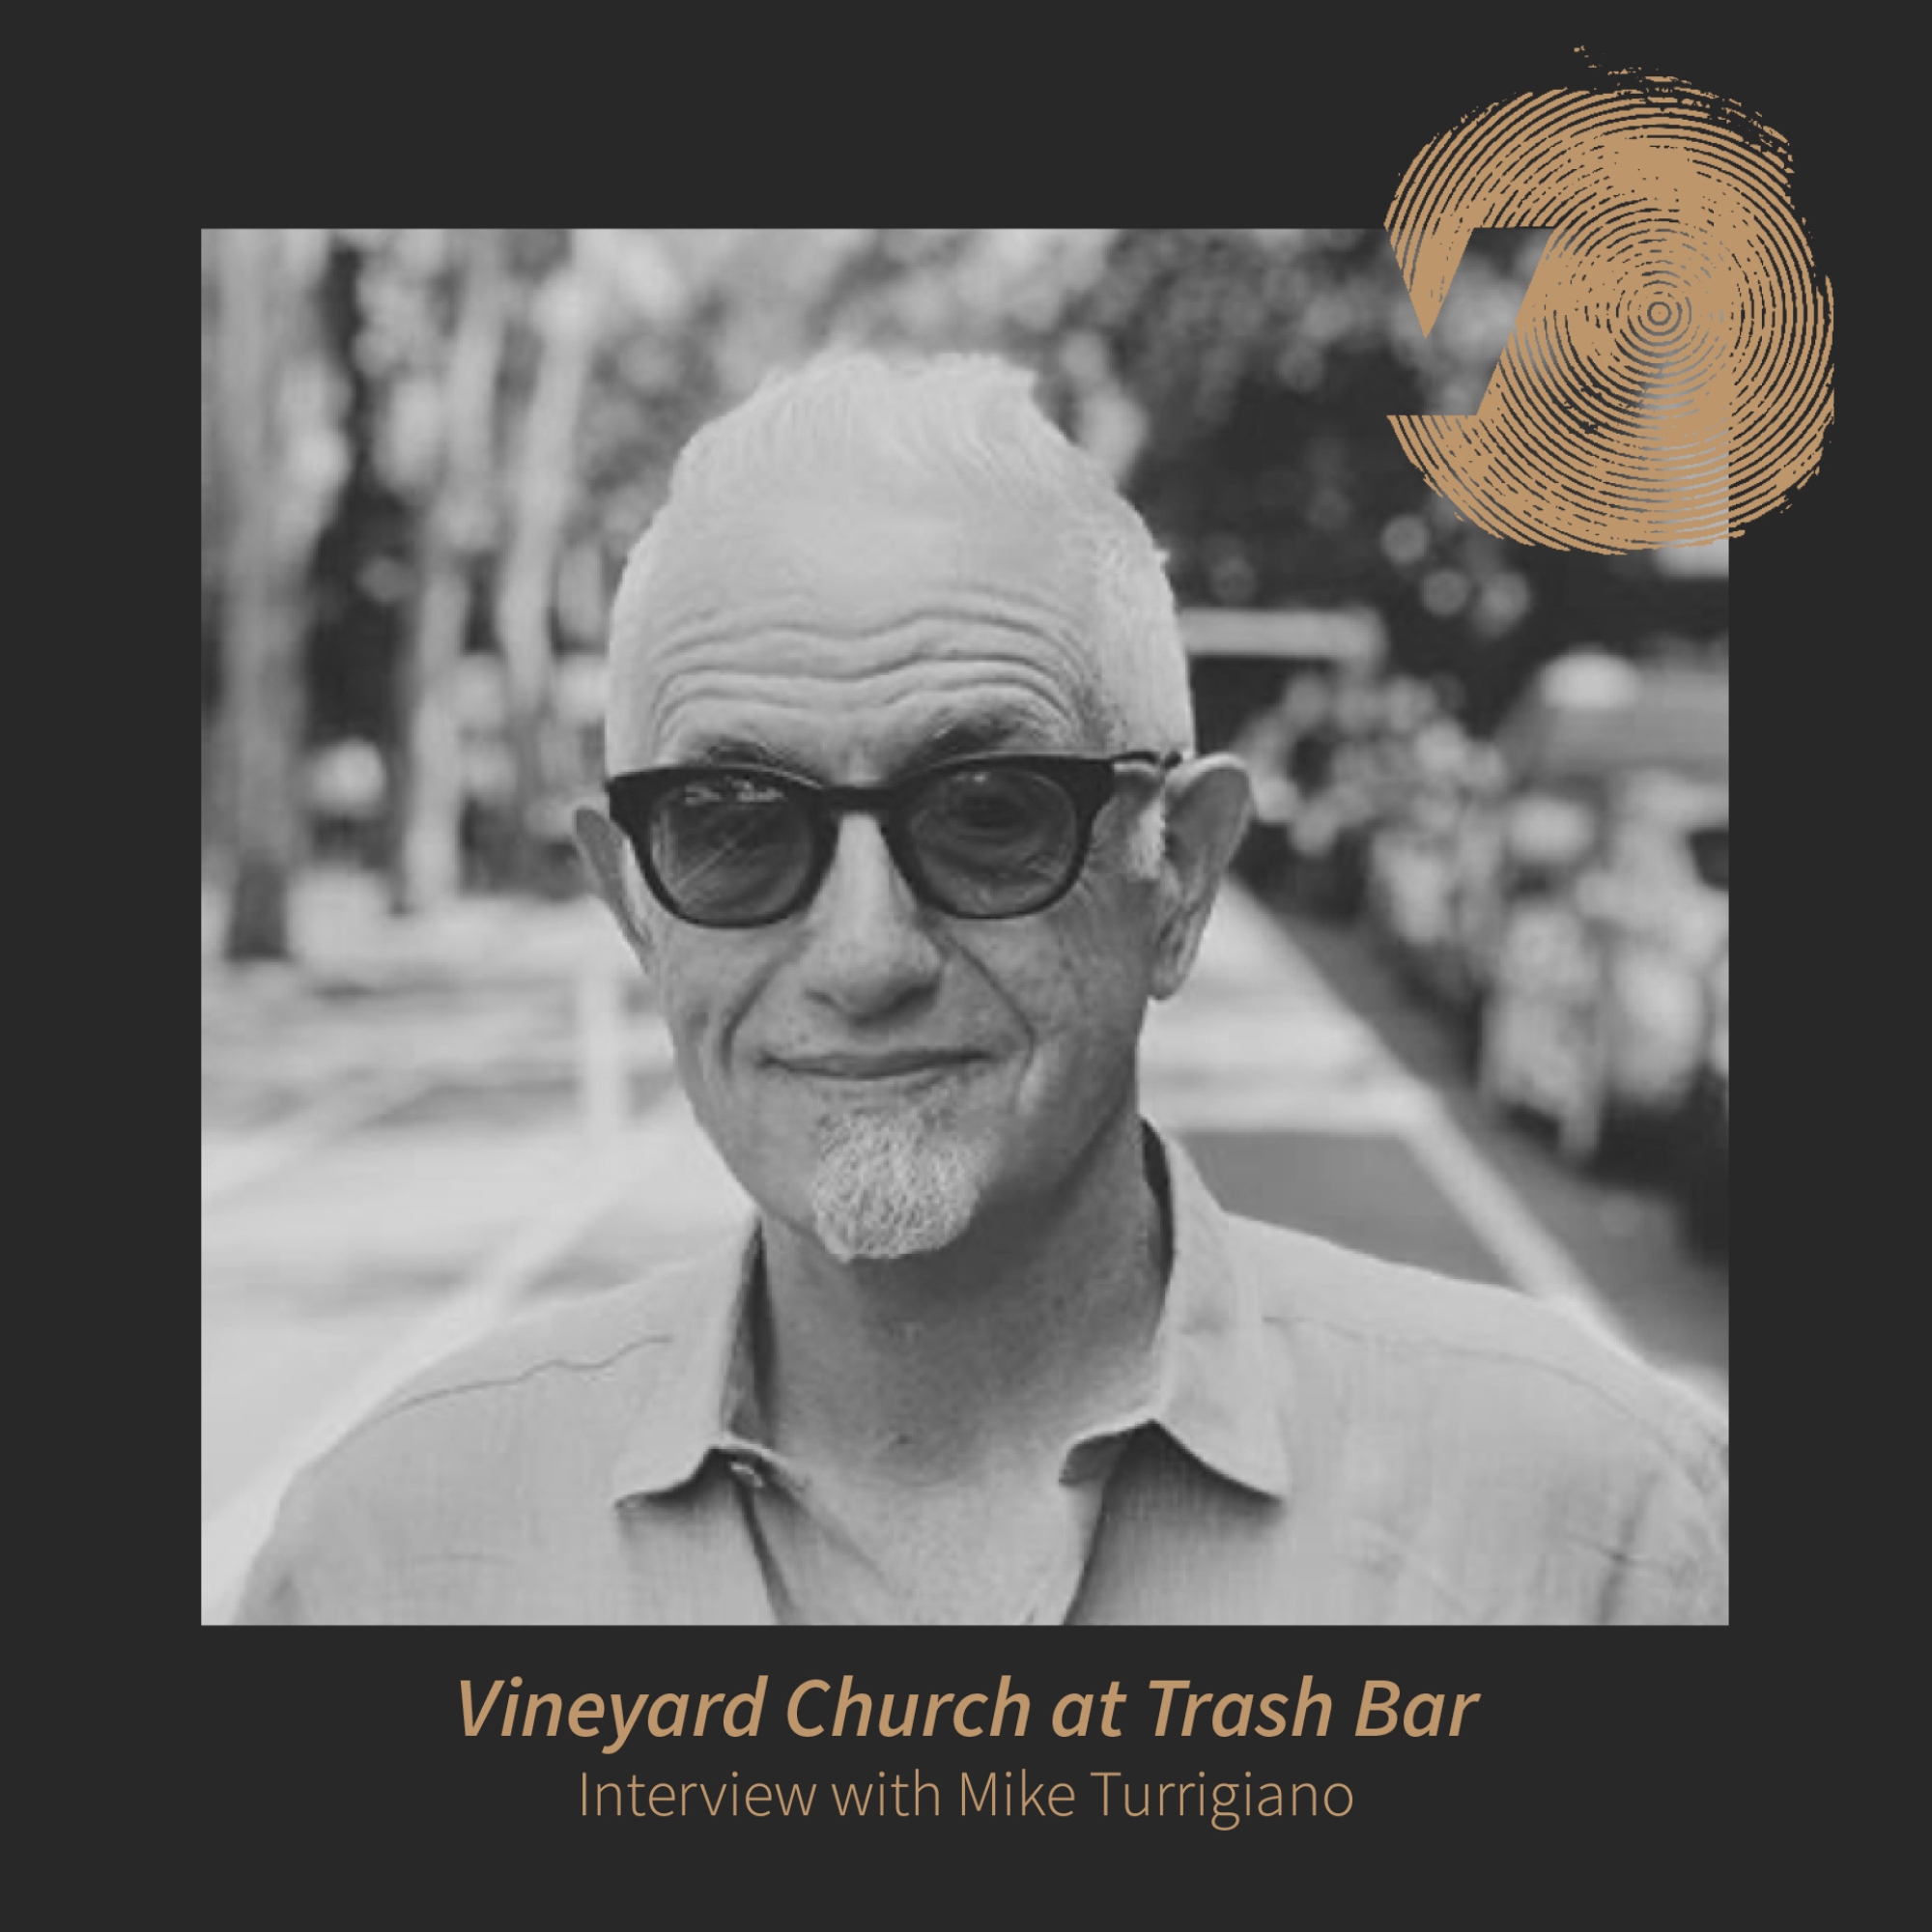 We Are Vineyard Church Story: Vineyard Church at Trash Bar